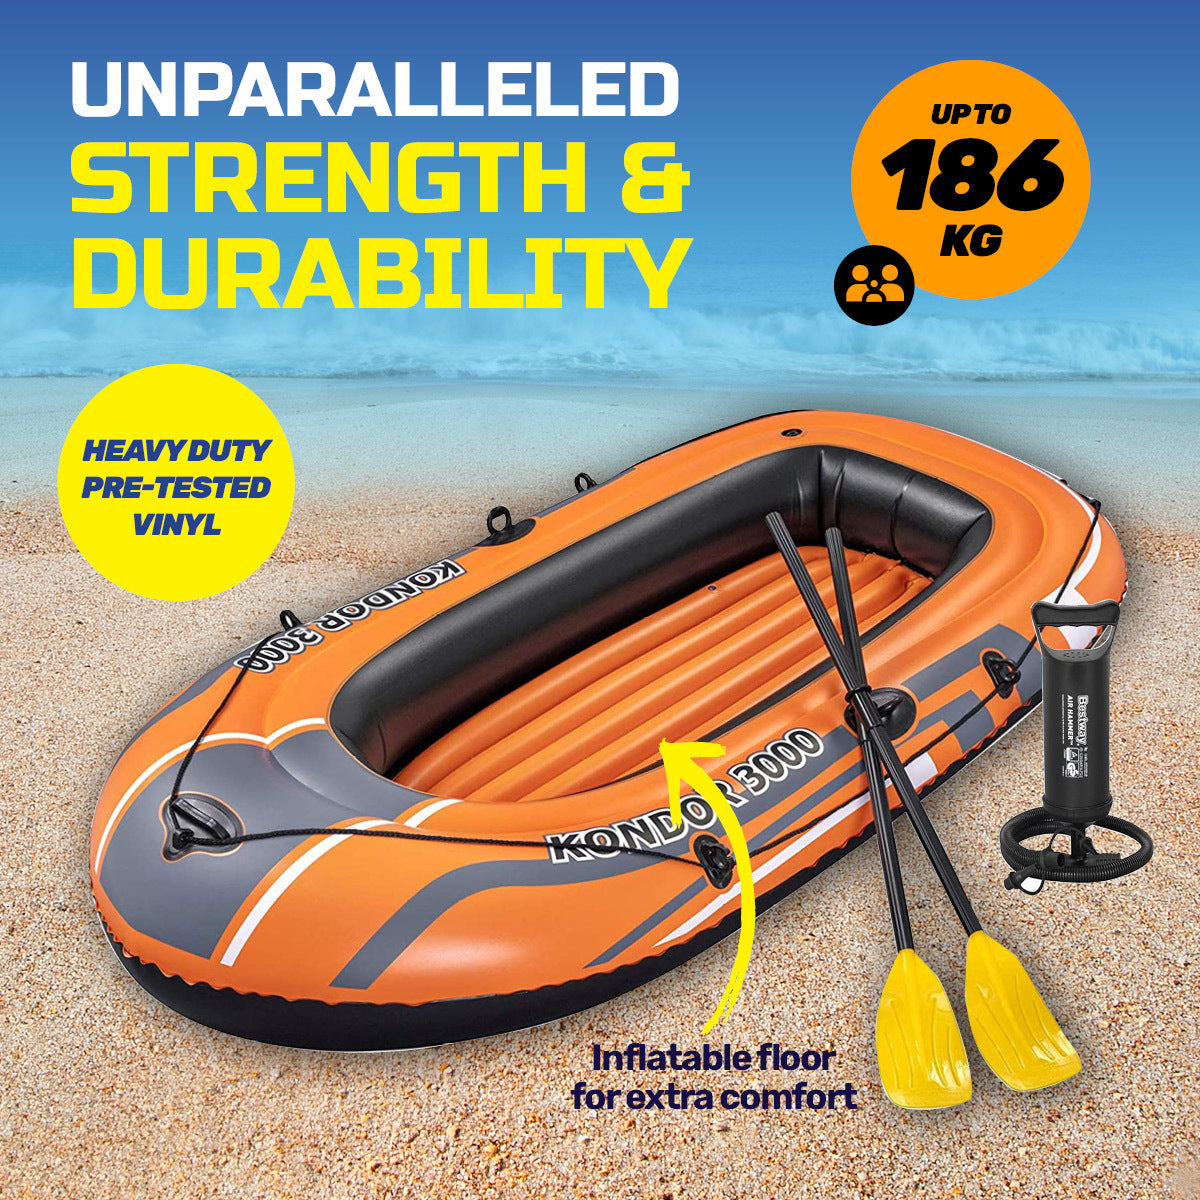 Kondor 3000 Inflatable Boat UV Resistant Leak Proof Beach Pool Fun